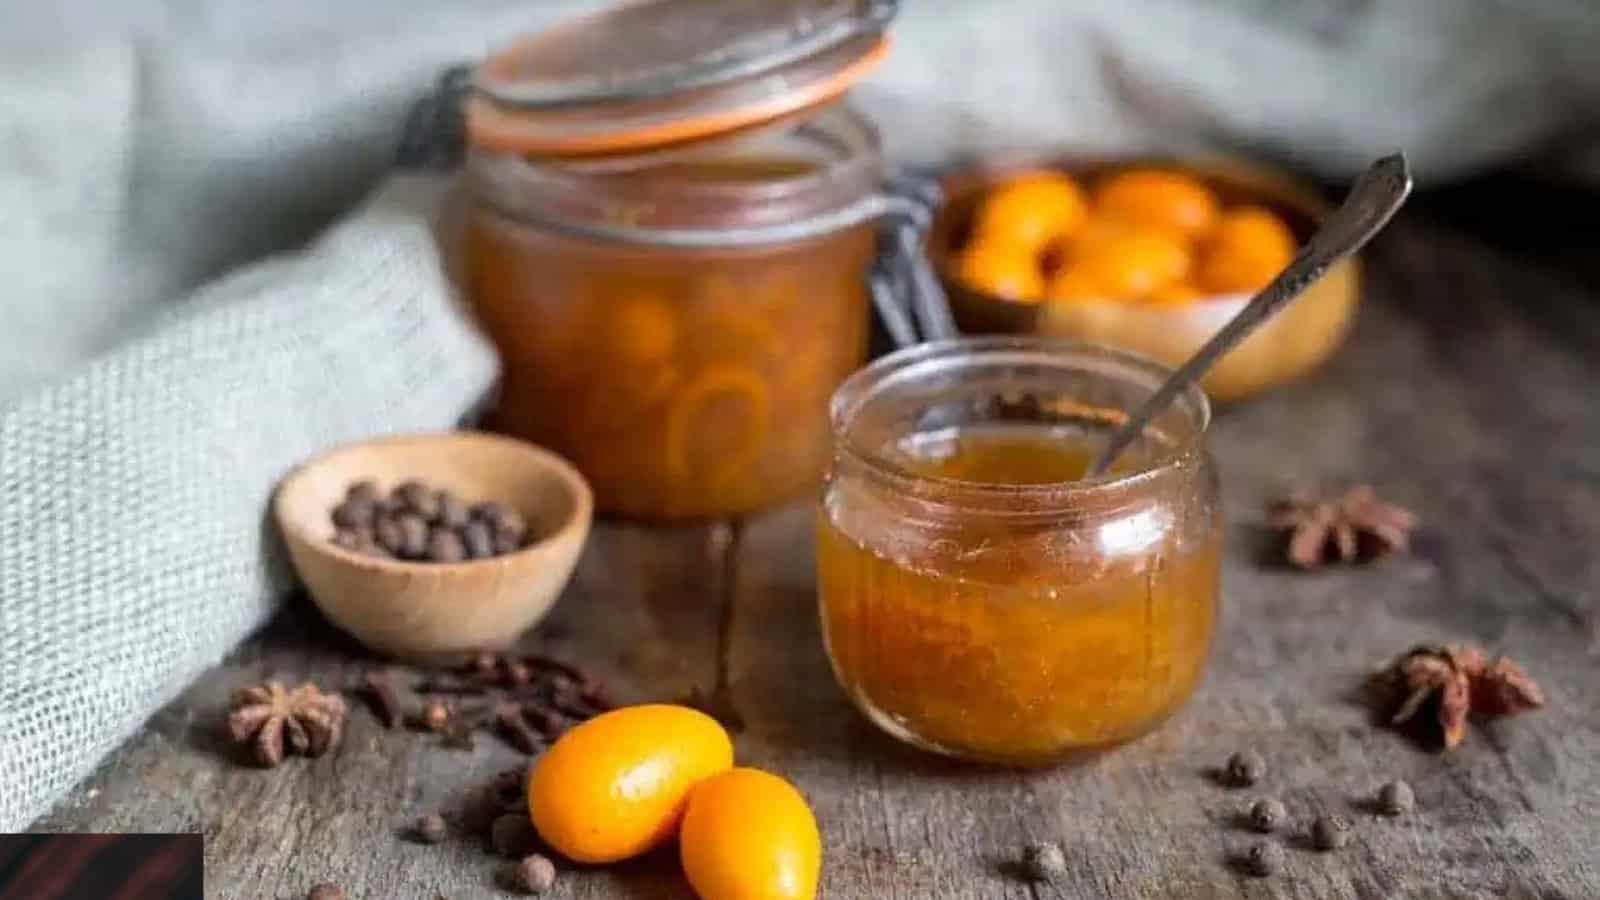 Kumquat jam jar with kumquats and spices in background.